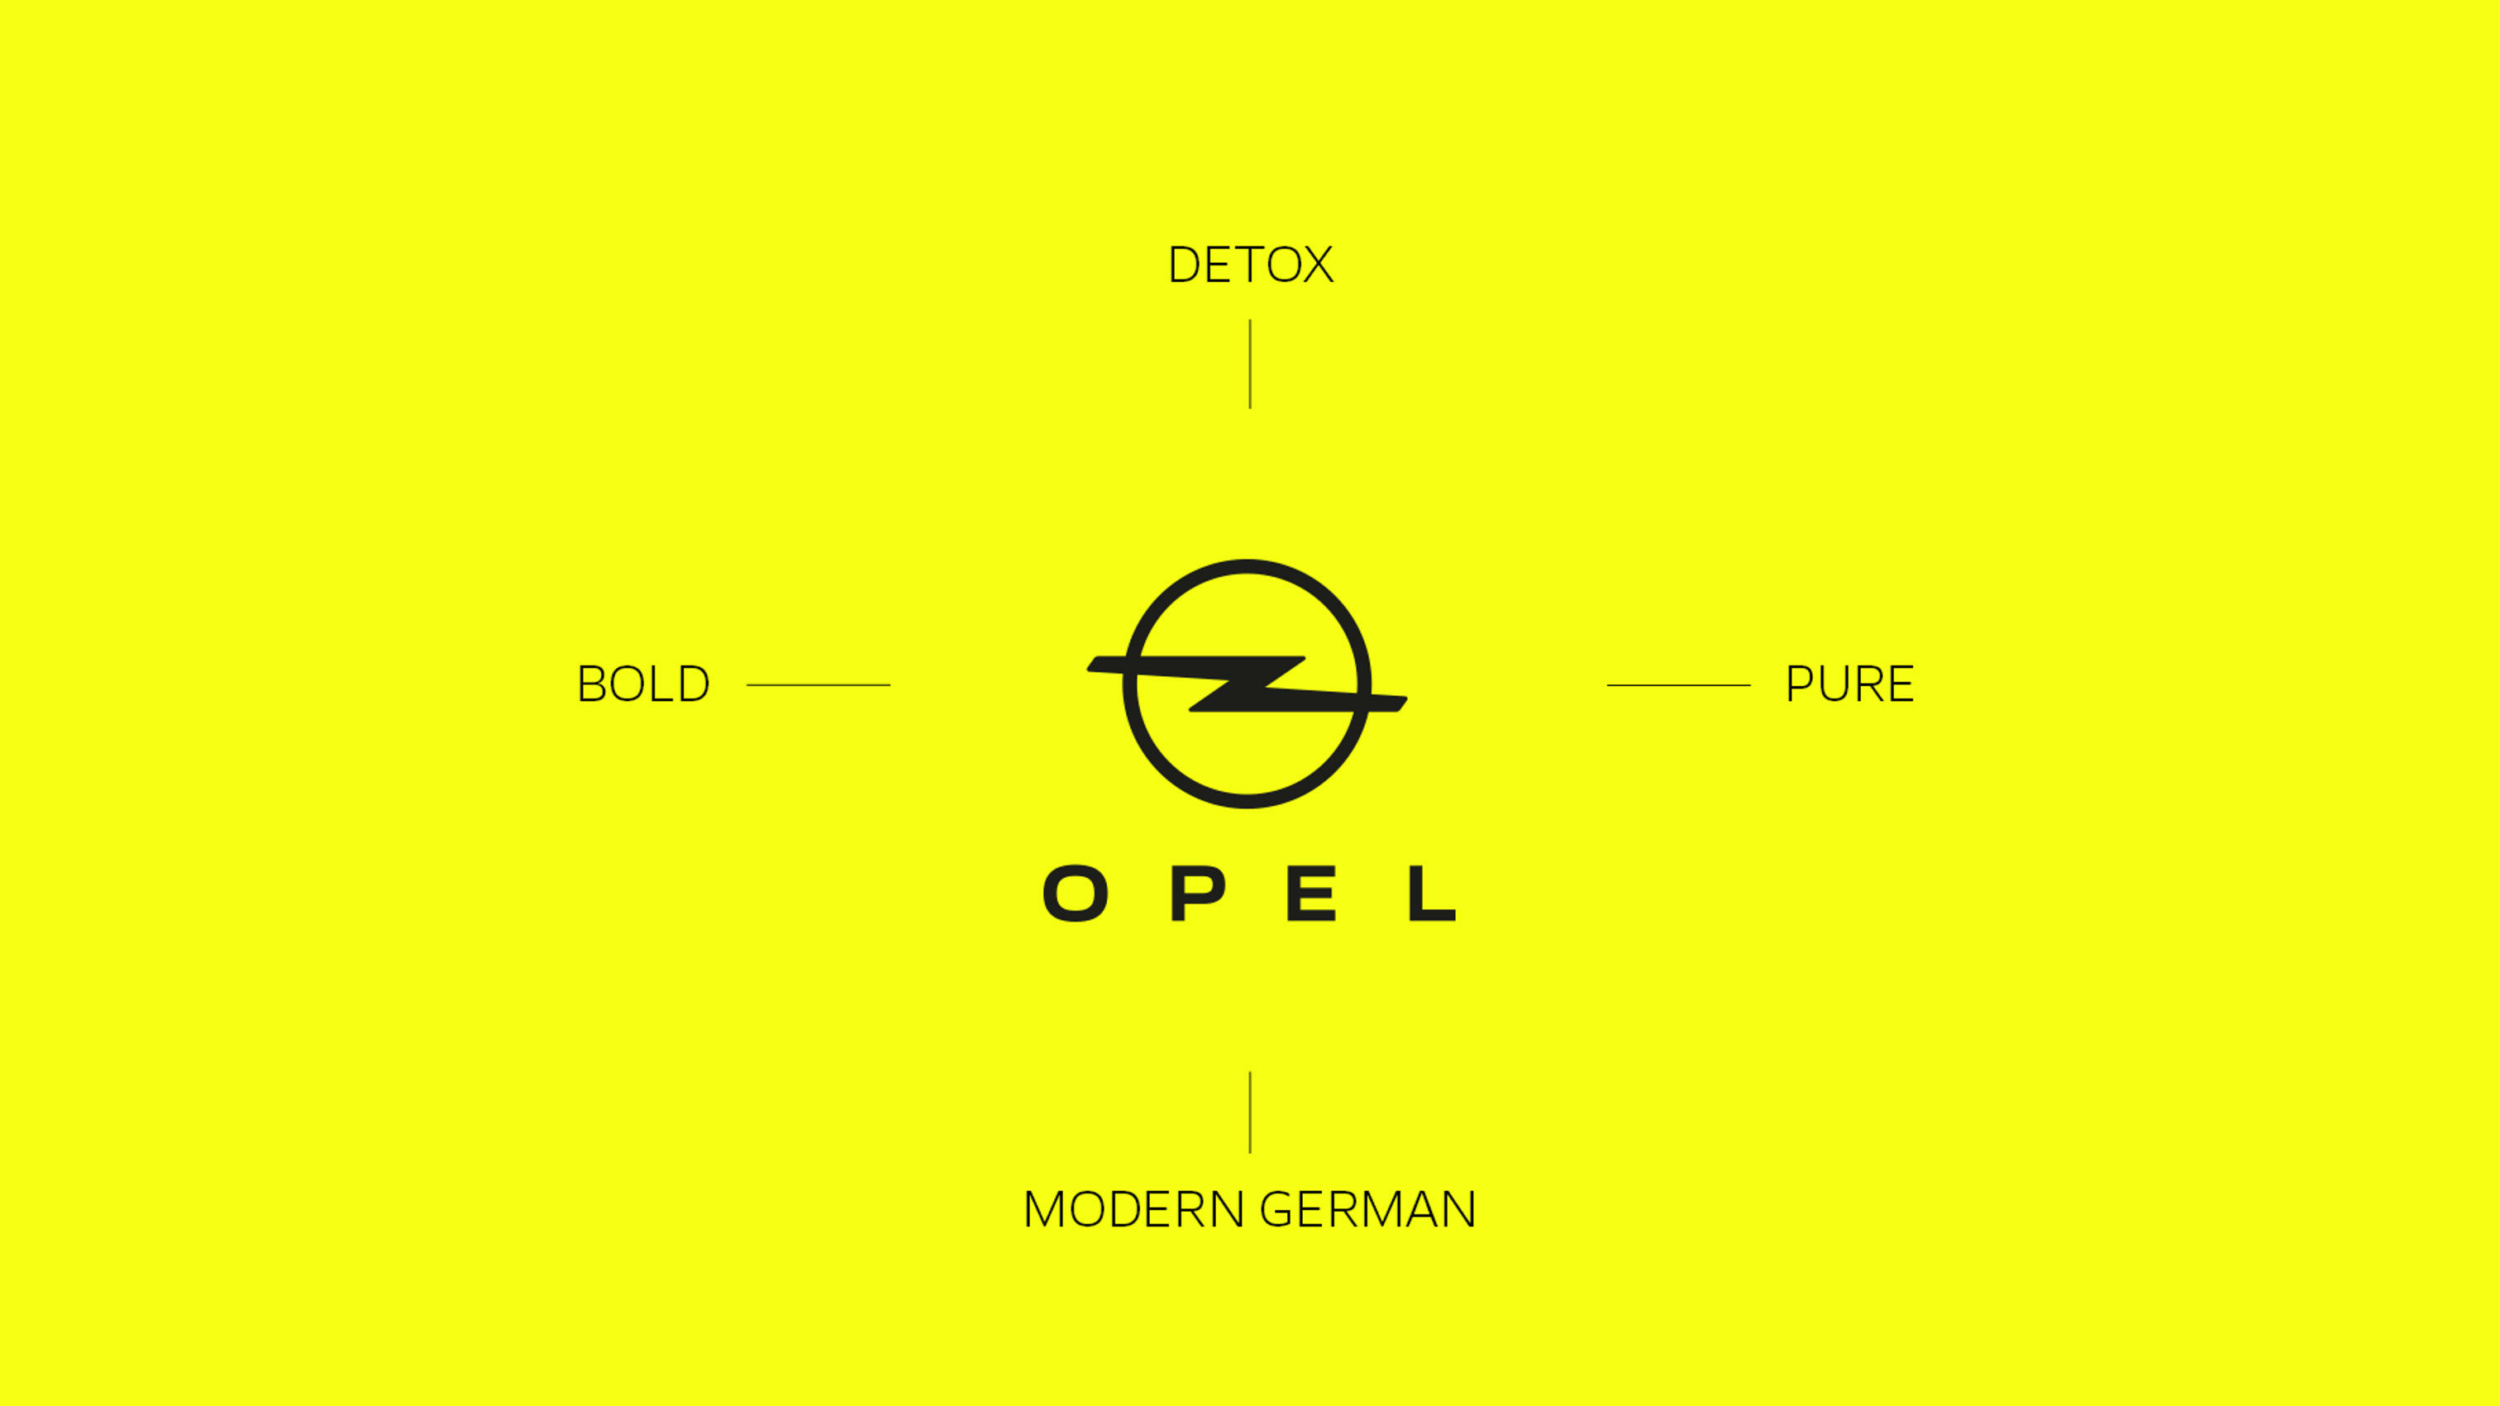 Opel Logo (2020) / Detox, Pure, Modern German, Bold, Quelle: Opel